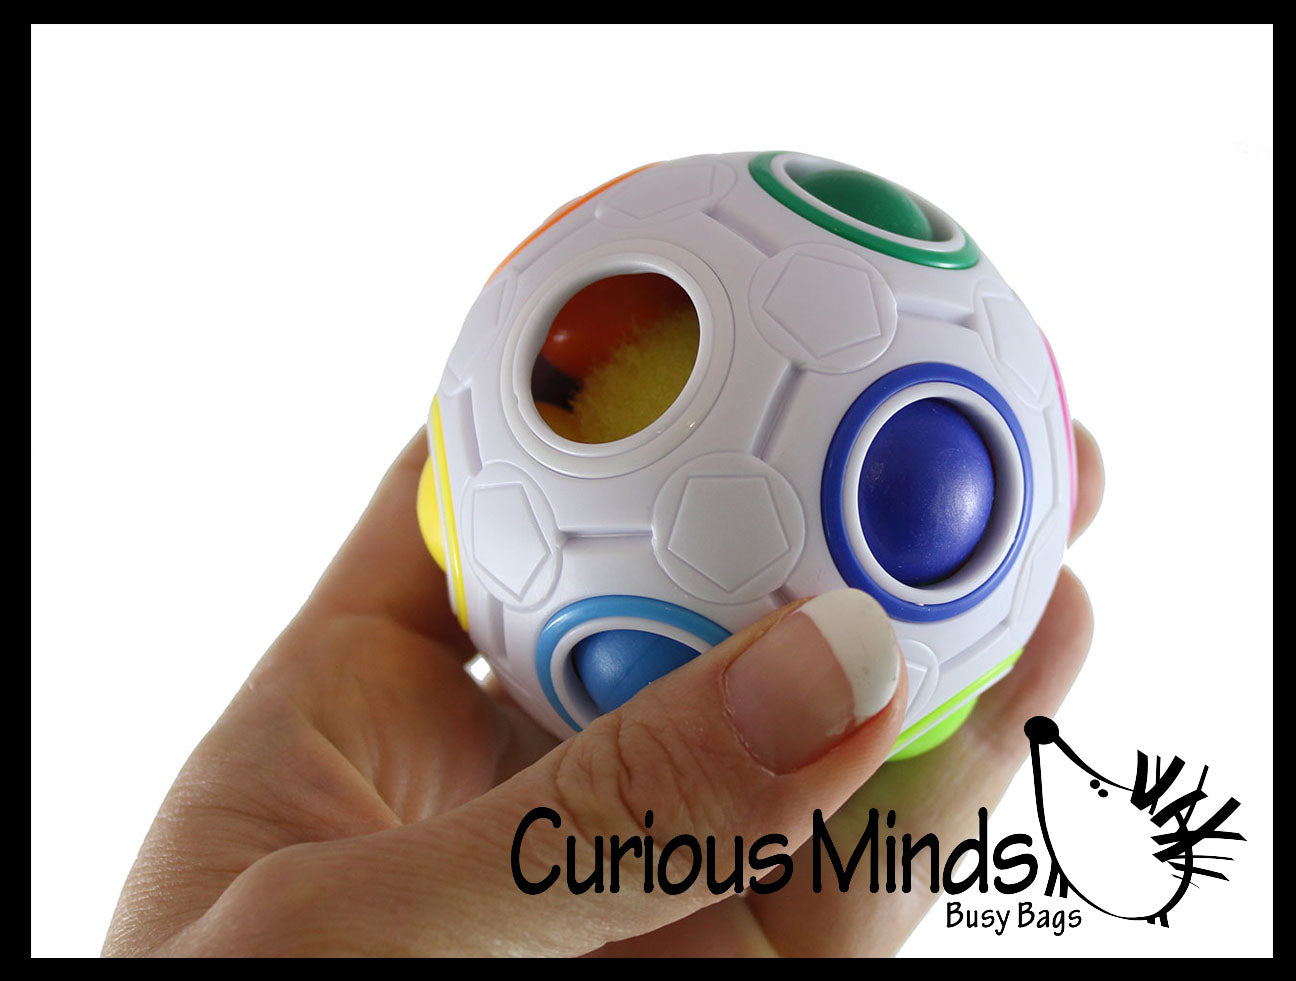 Duncan Color Puzzle Ball - Color Shift Puzzle Multi-Colored Puzzle Speed Cube Games - Problem-Solving Brain Teaser Logic Toys - Travel Toy Fidget